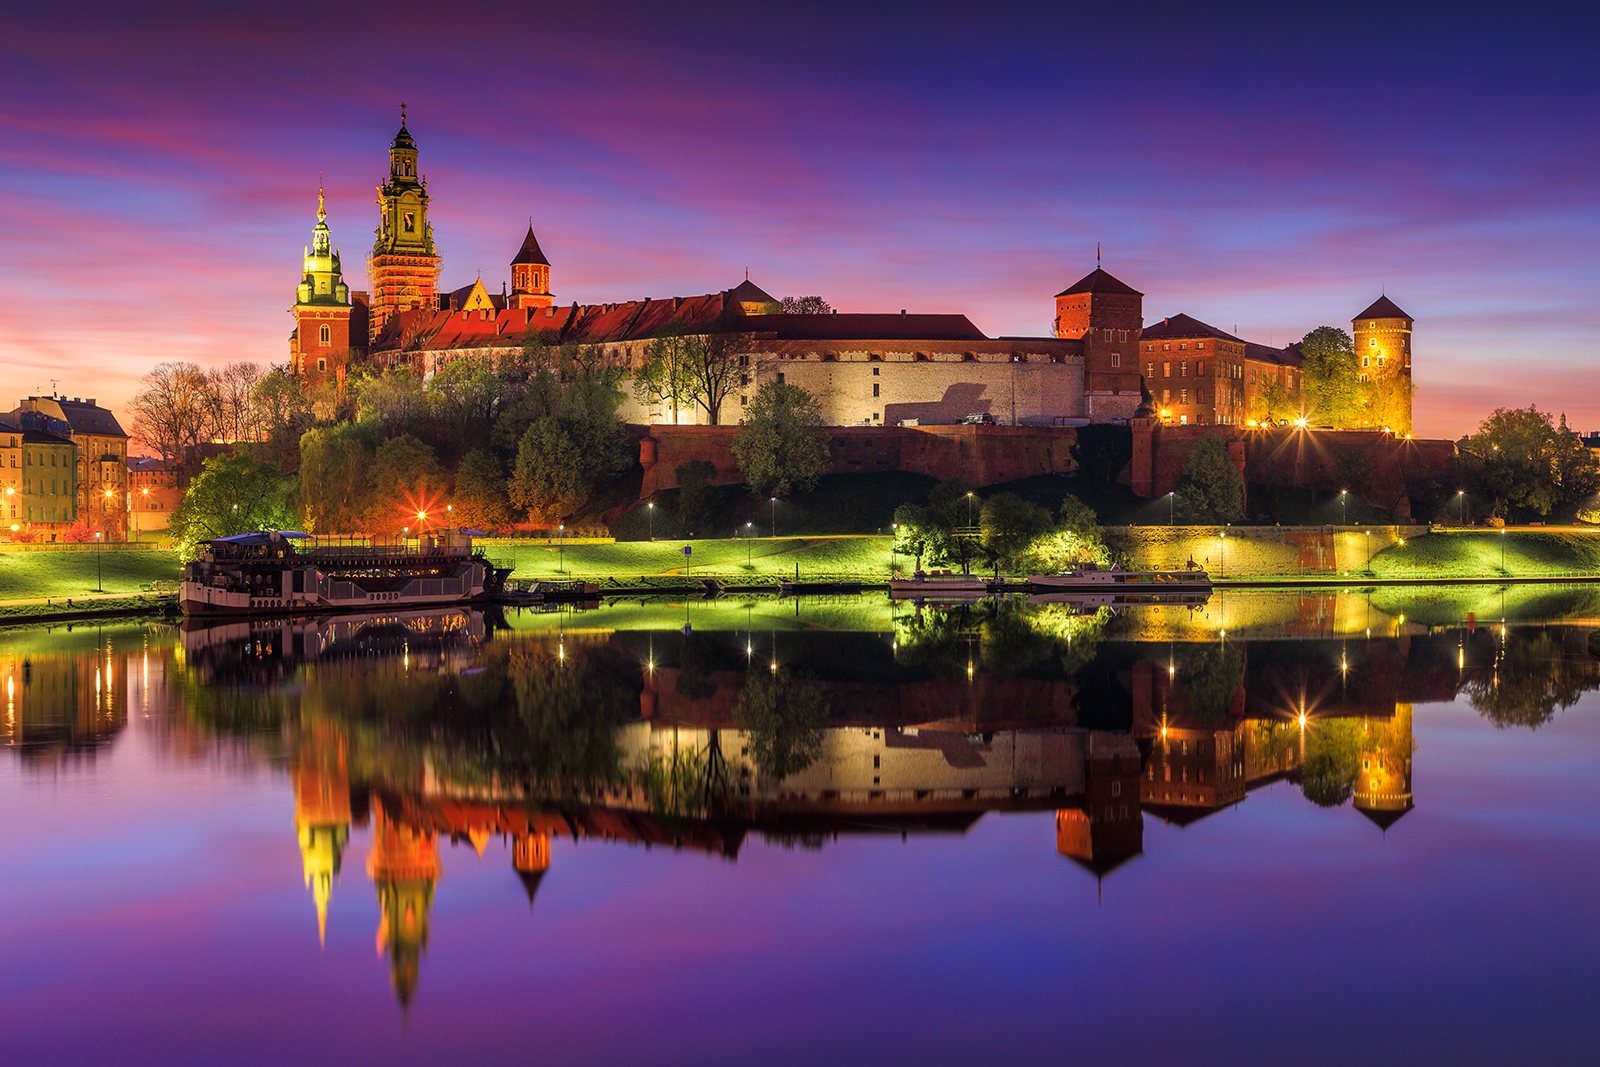 kraków, polska, poland, wawel castle, night,reflection, river, sunset, architecture, Marcin Rydzewski